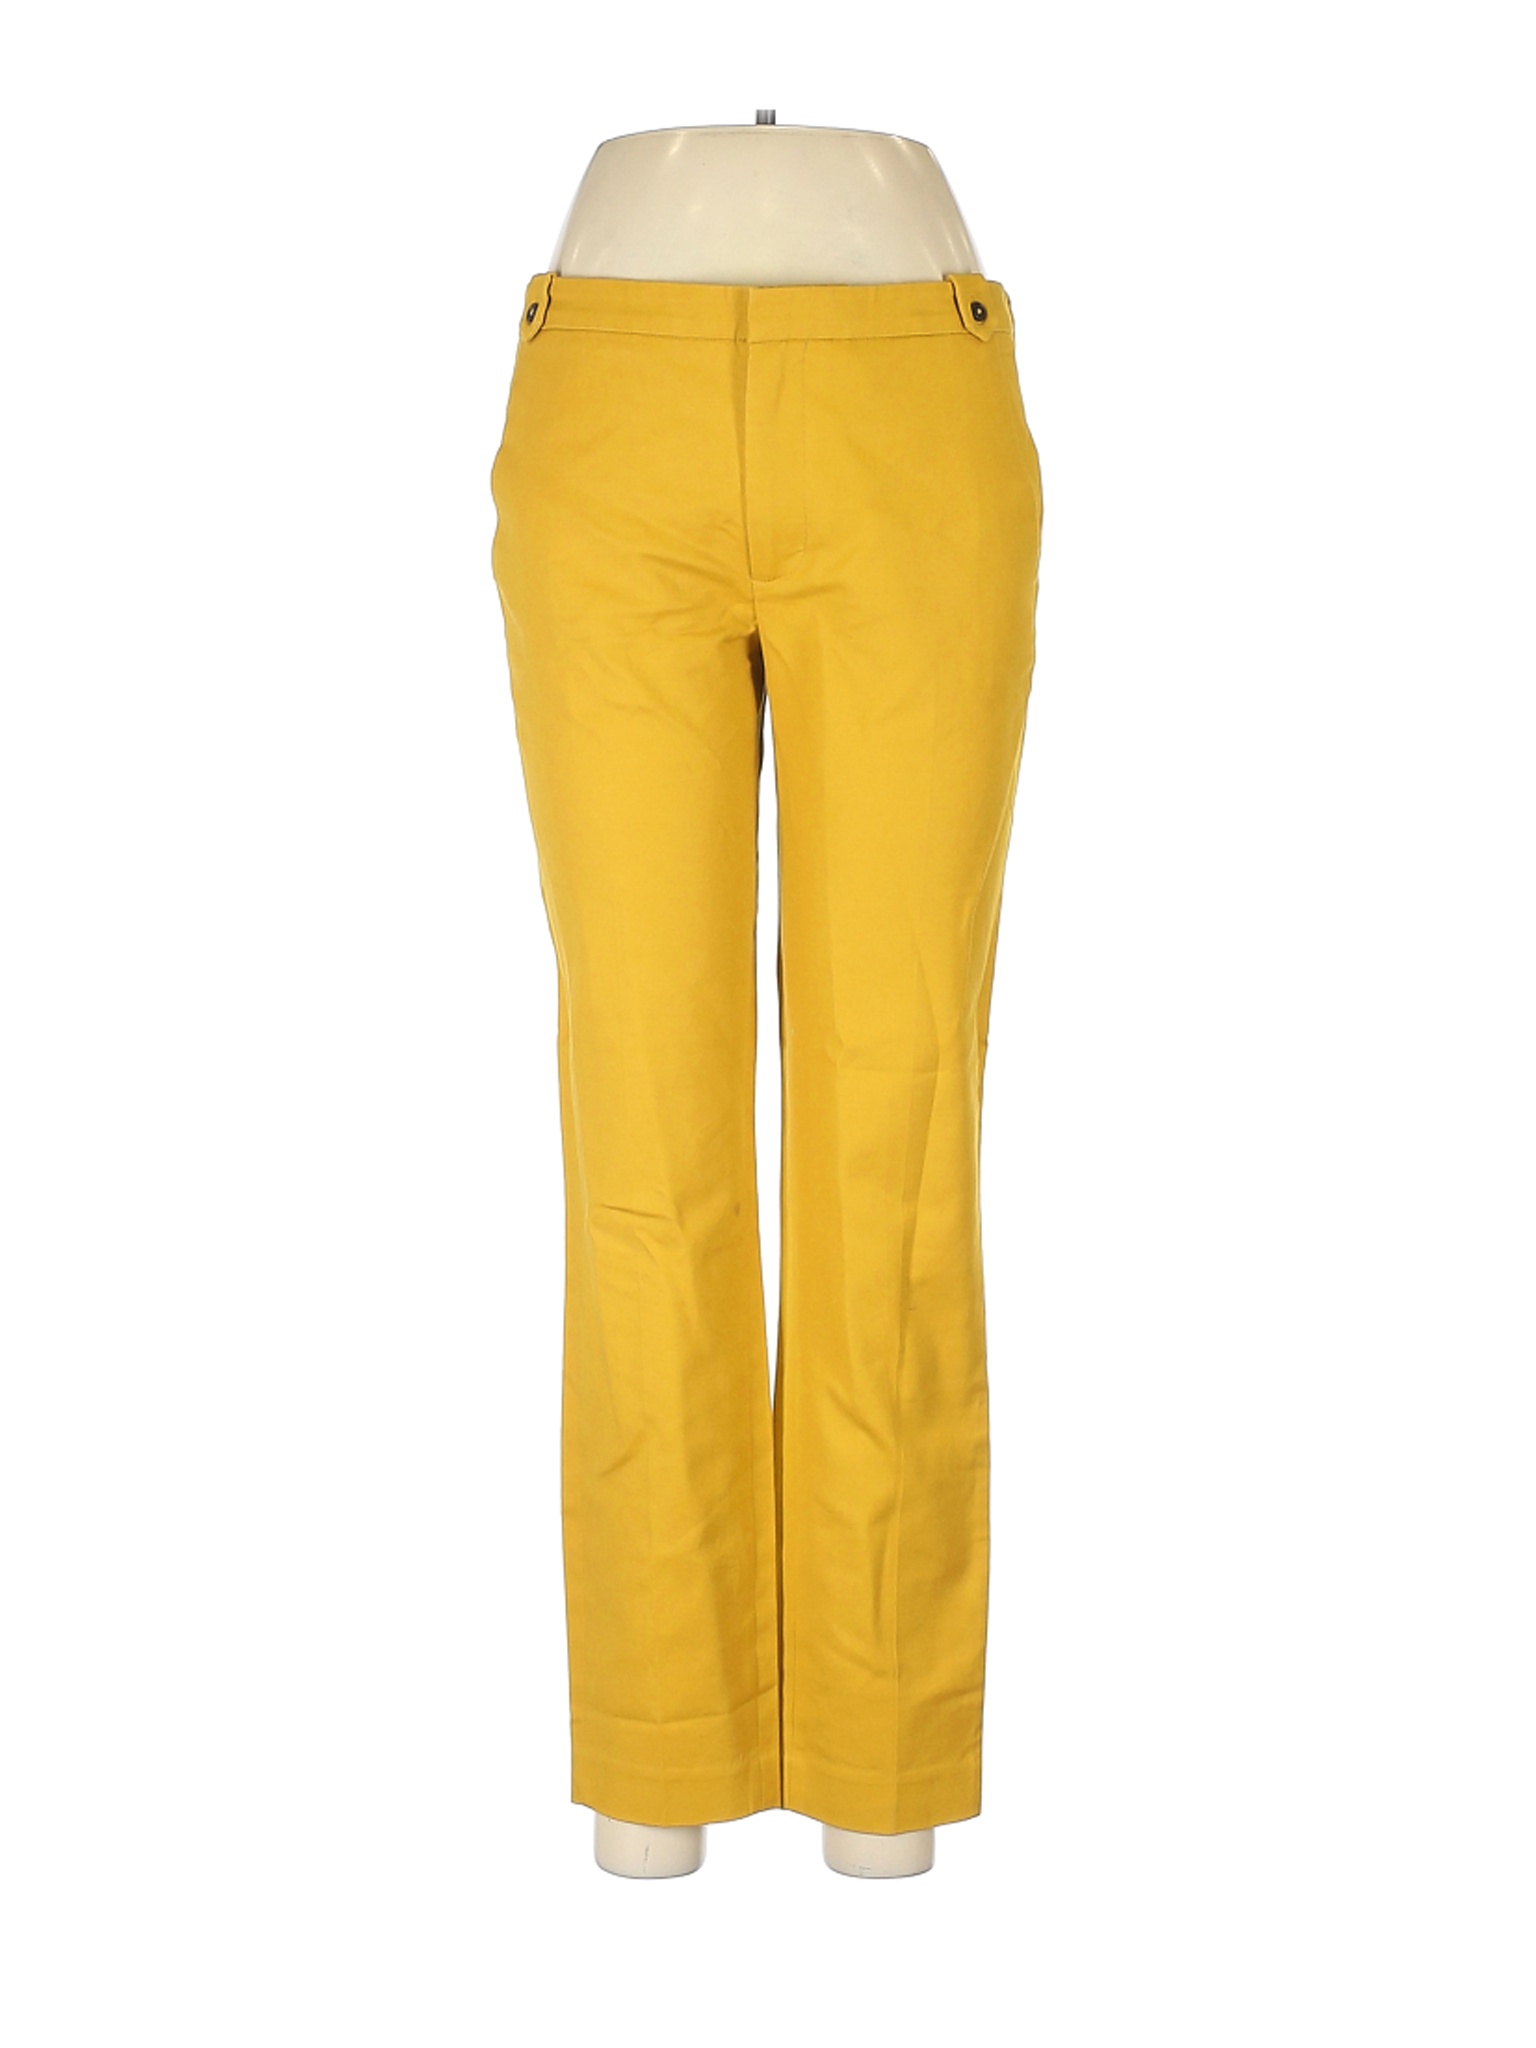 Zara Basic Women Yellow Dress Pants 6 | eBay